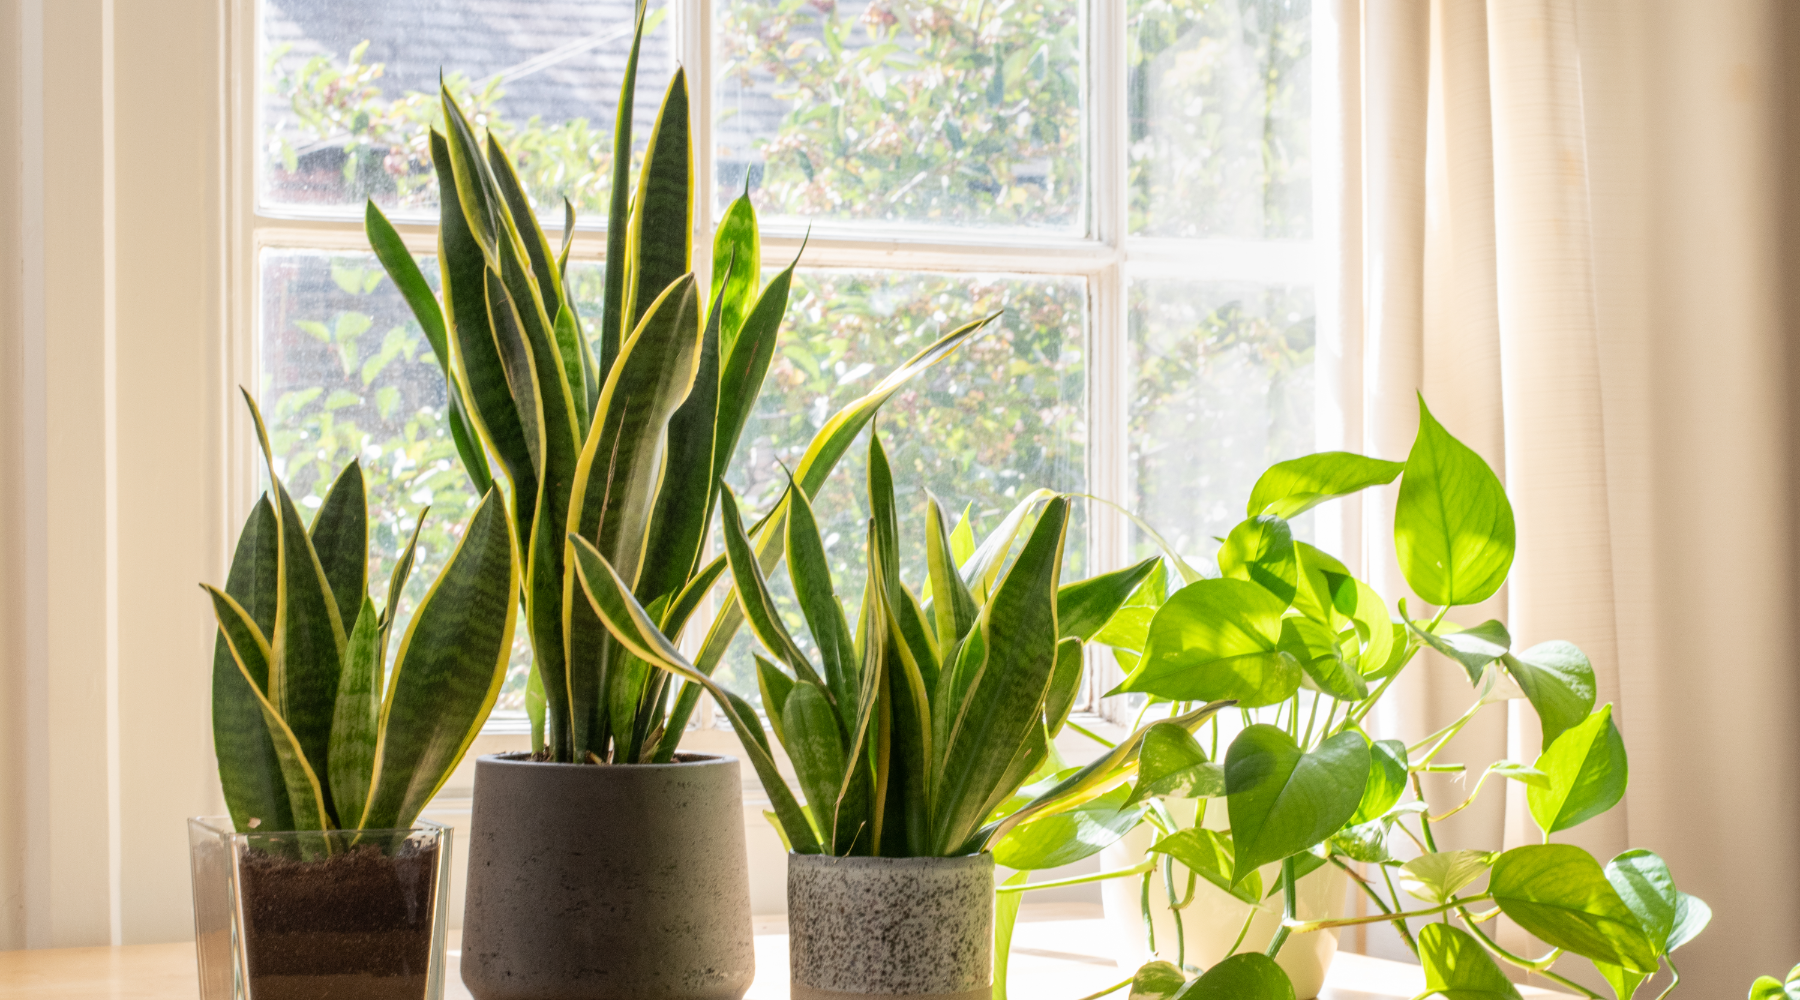 Houseplants for good air quality - snake plants